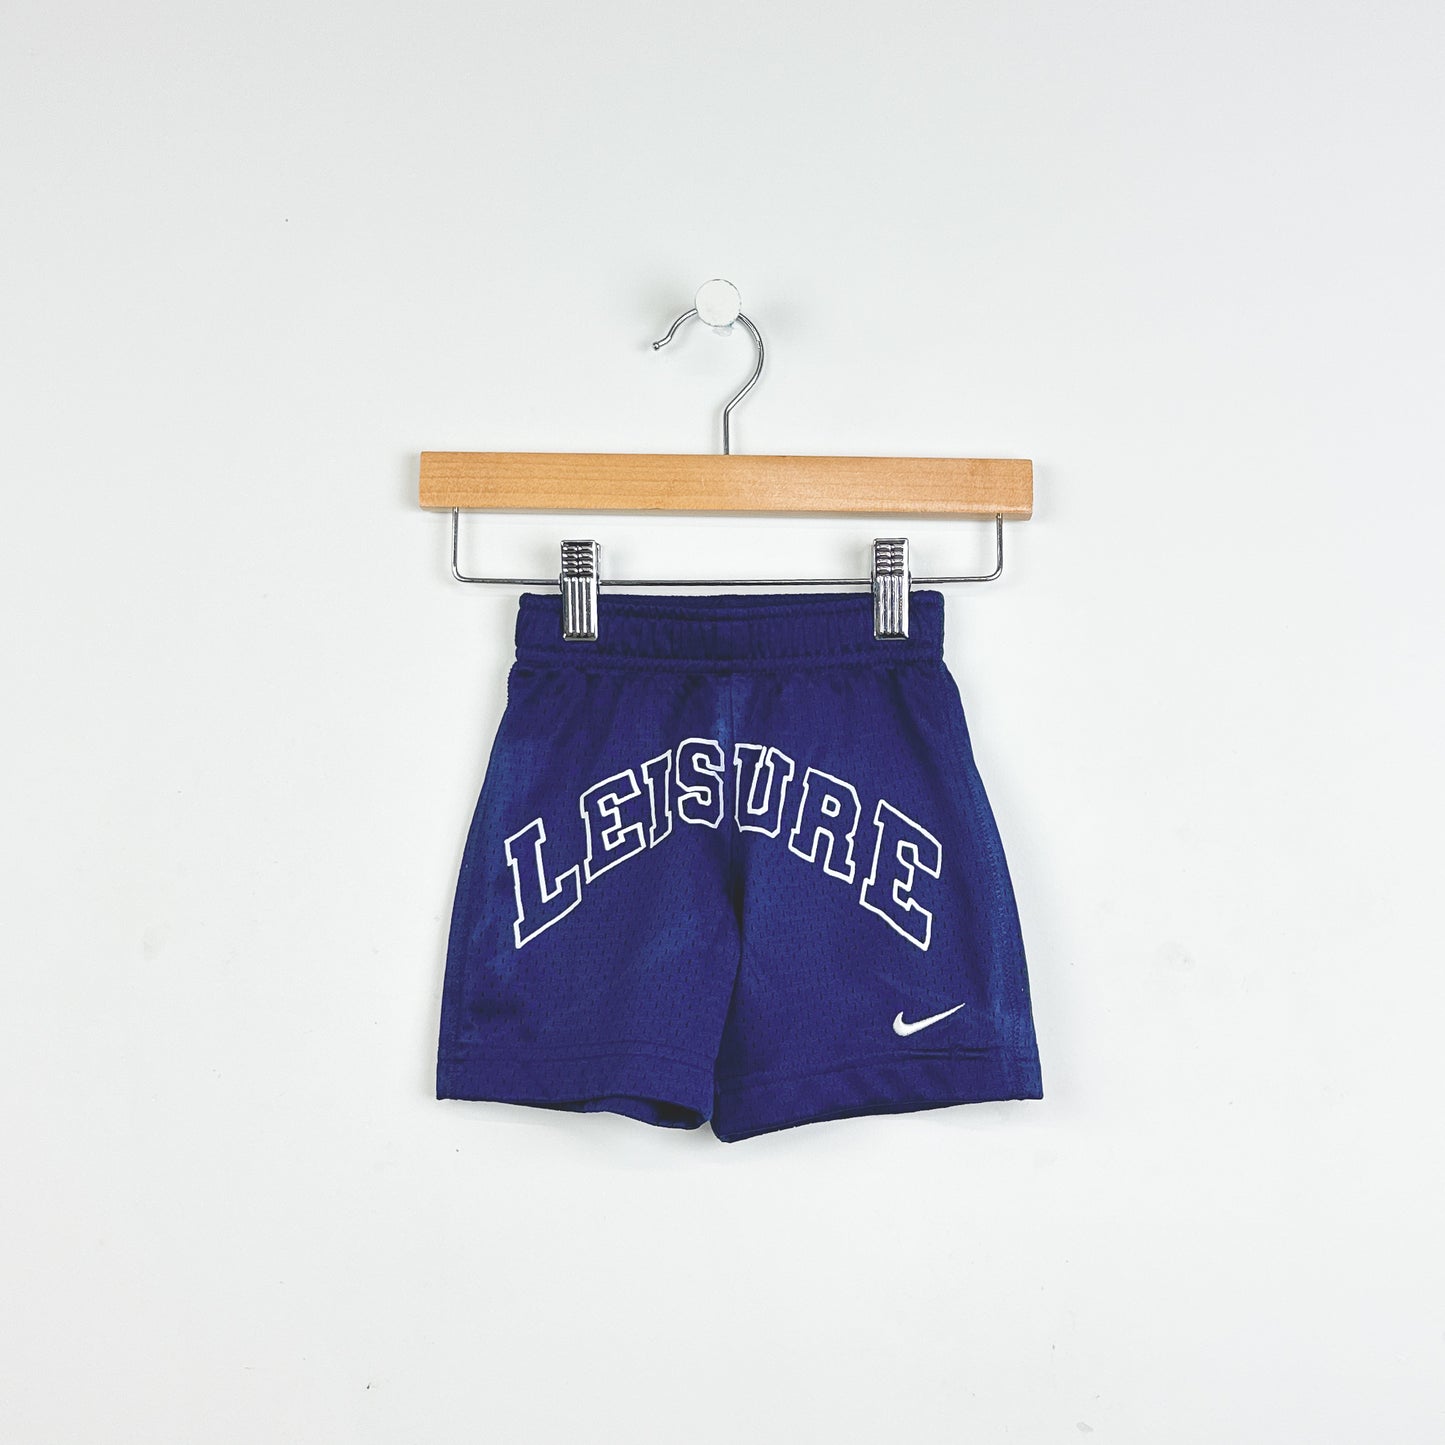 LEISURE - Navy Jr. Varsity Mesh Shorts - Size 2T